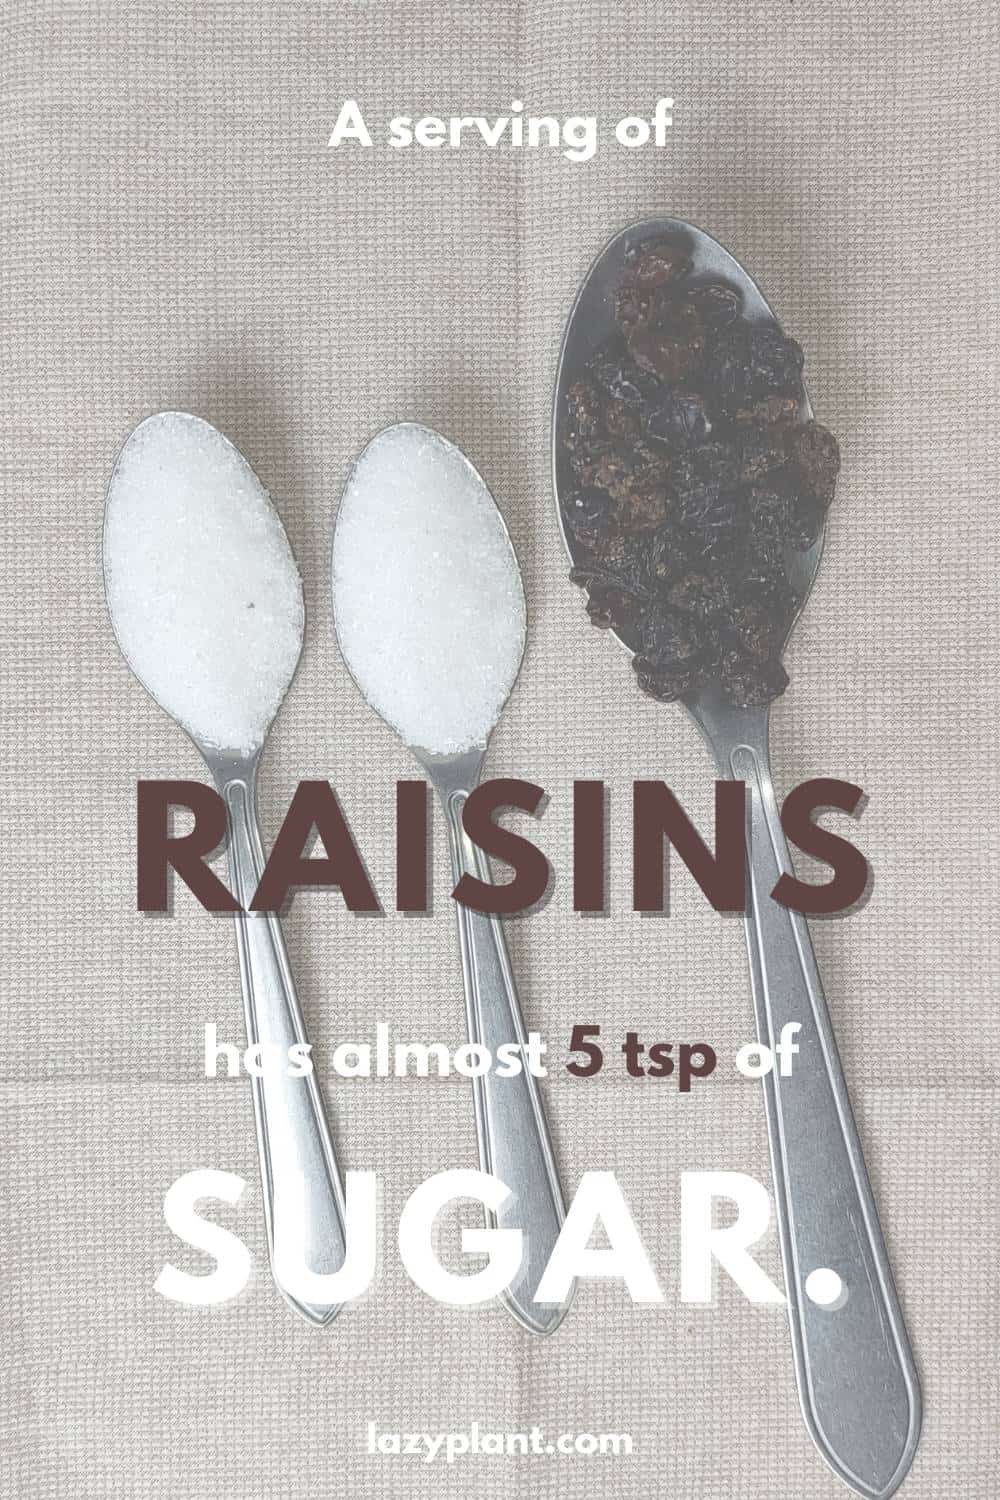 How much sugar in a serving of raisins?